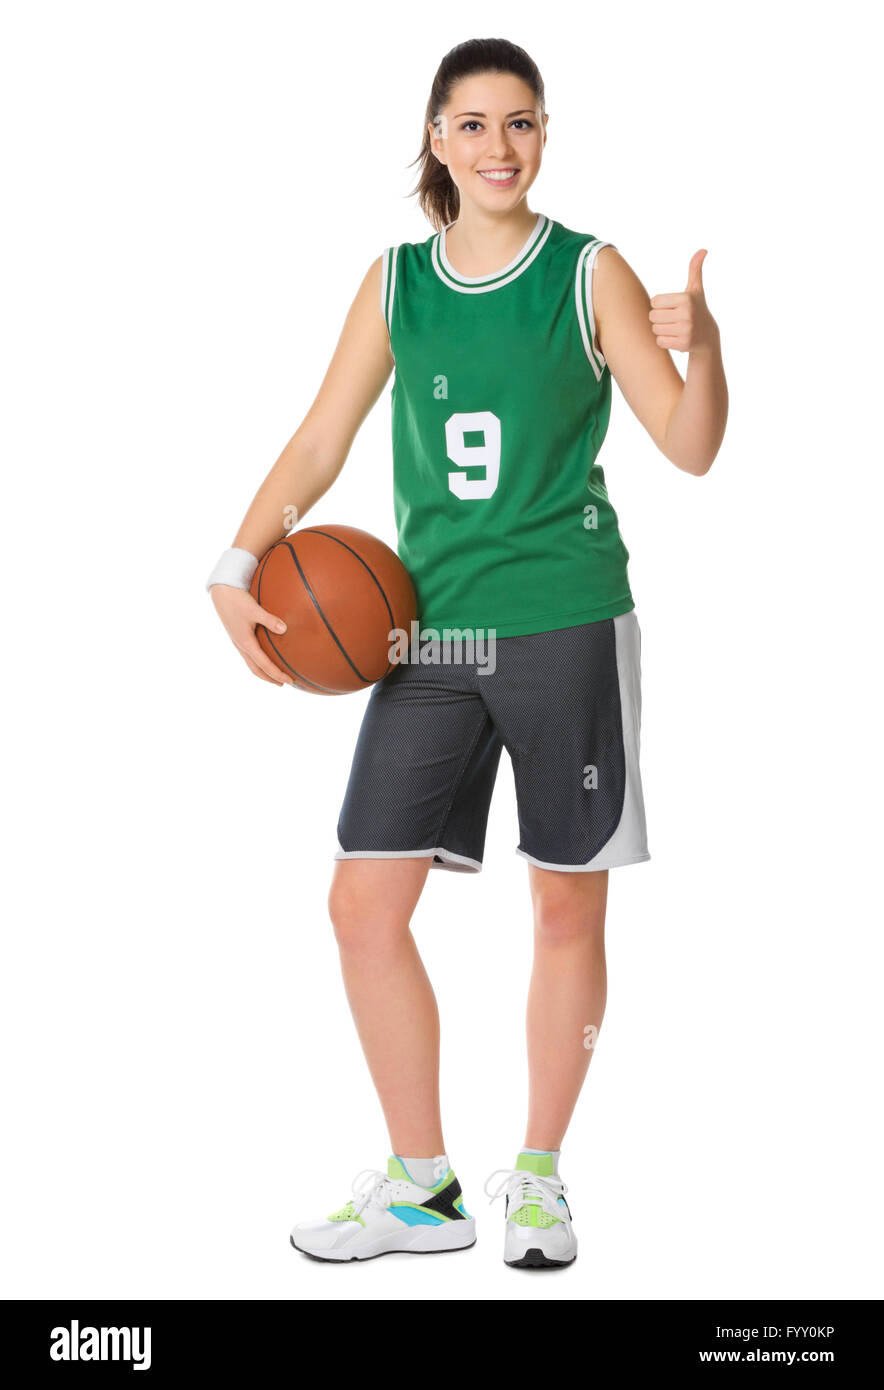 Young girl basketball player isolated Stock Photo